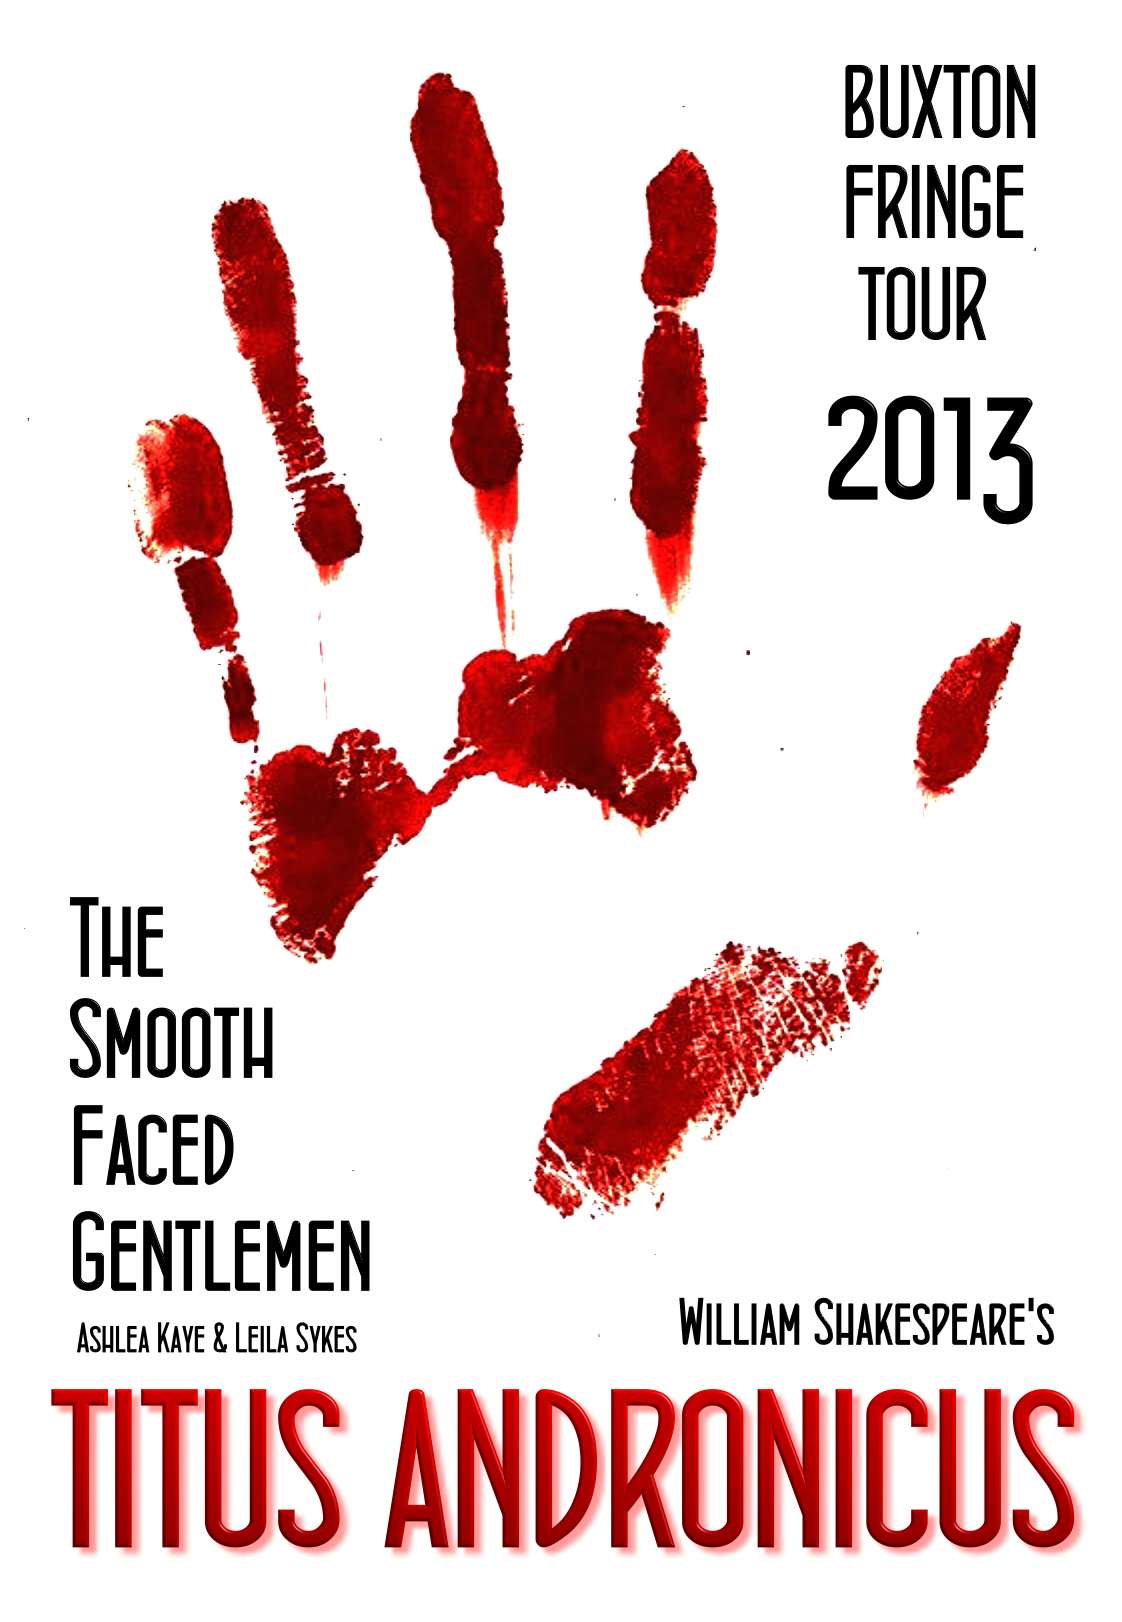 Titus Andronicus - Smooth Faced Gentlemen UK tour Buxton Fringe, Edinburgh Fringe theatre 2013